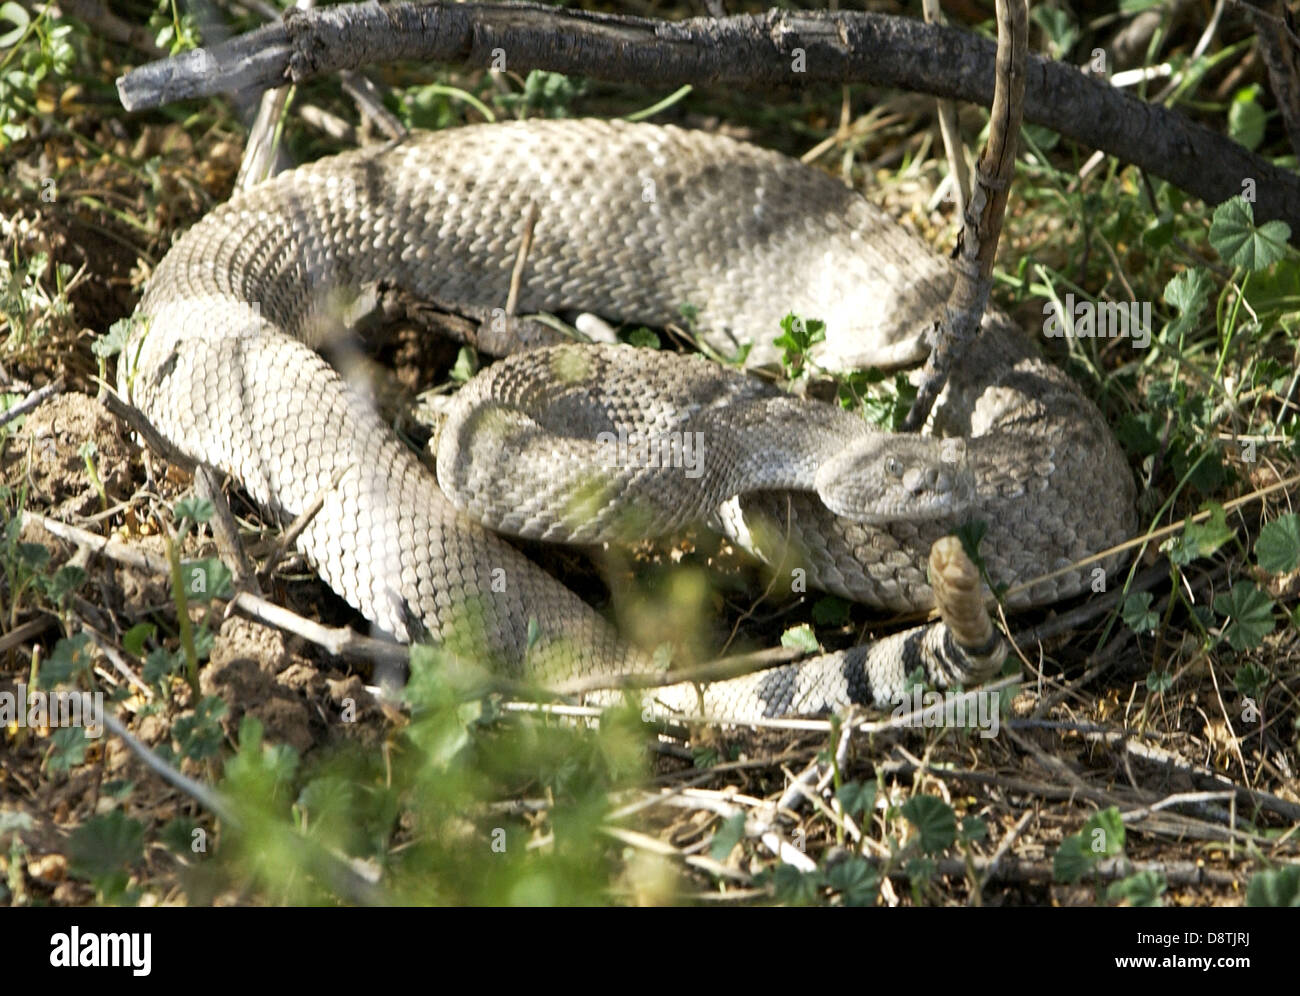 Rattlesnake venomous Crotalus and Sistrurus predator hunts small animals kills pray with venomous bite, rattlesnake, snake, Stock Photo